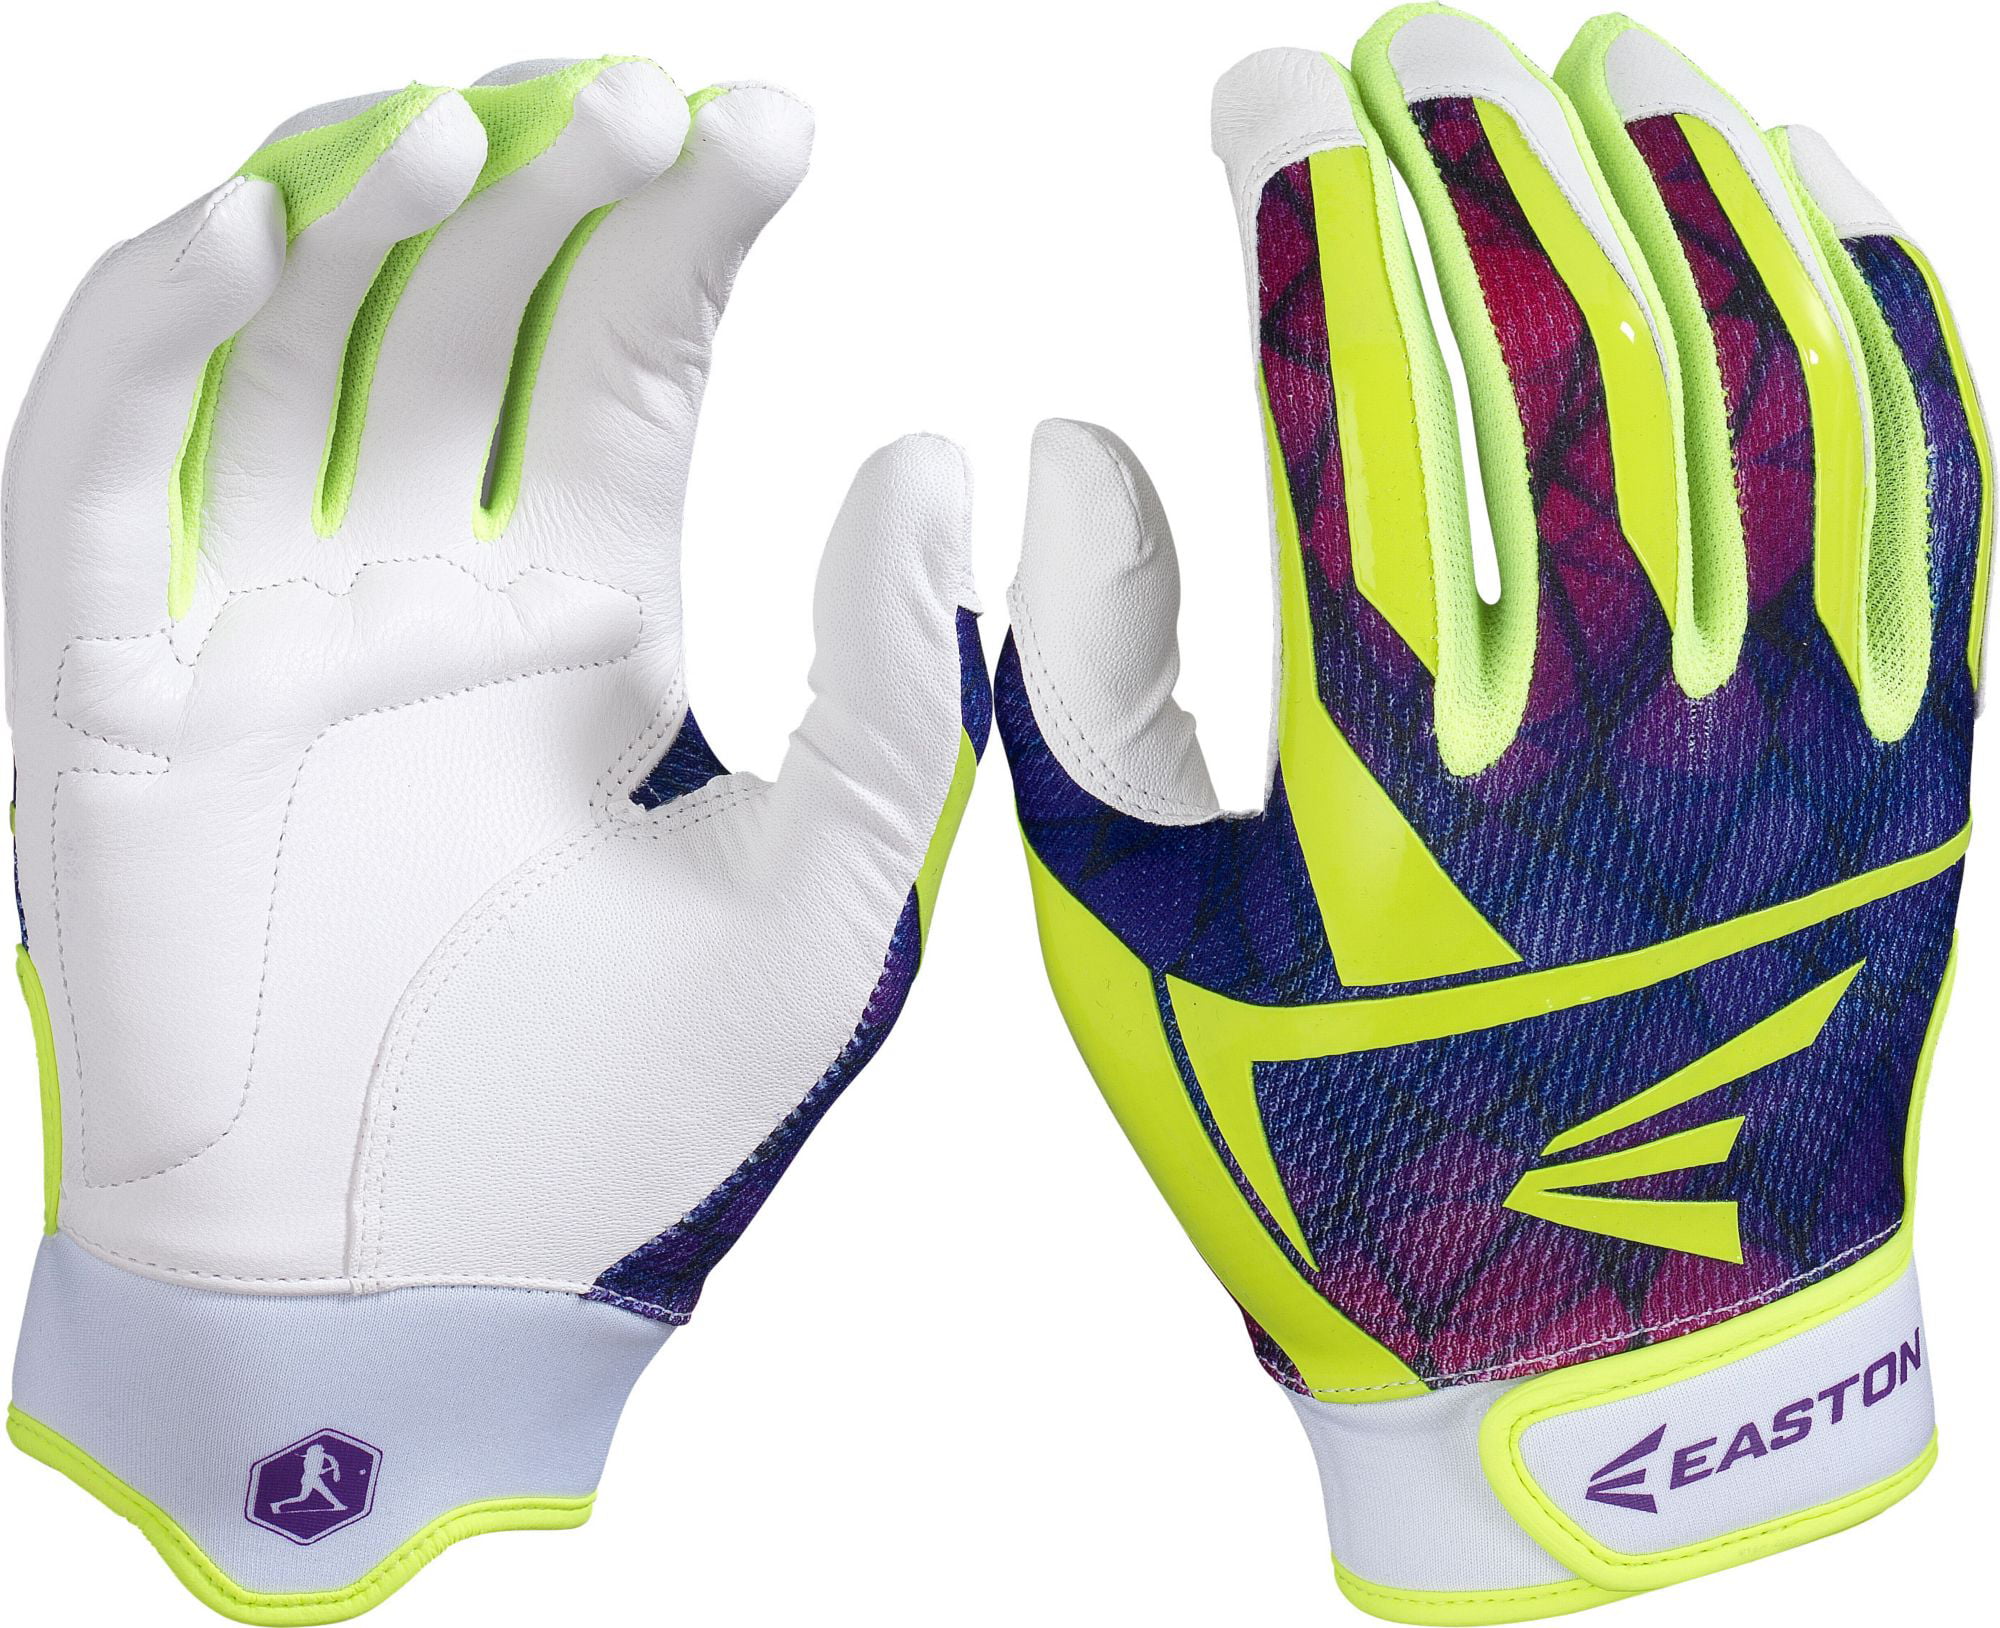 Easton Prowess VRS Glove Women's XL 